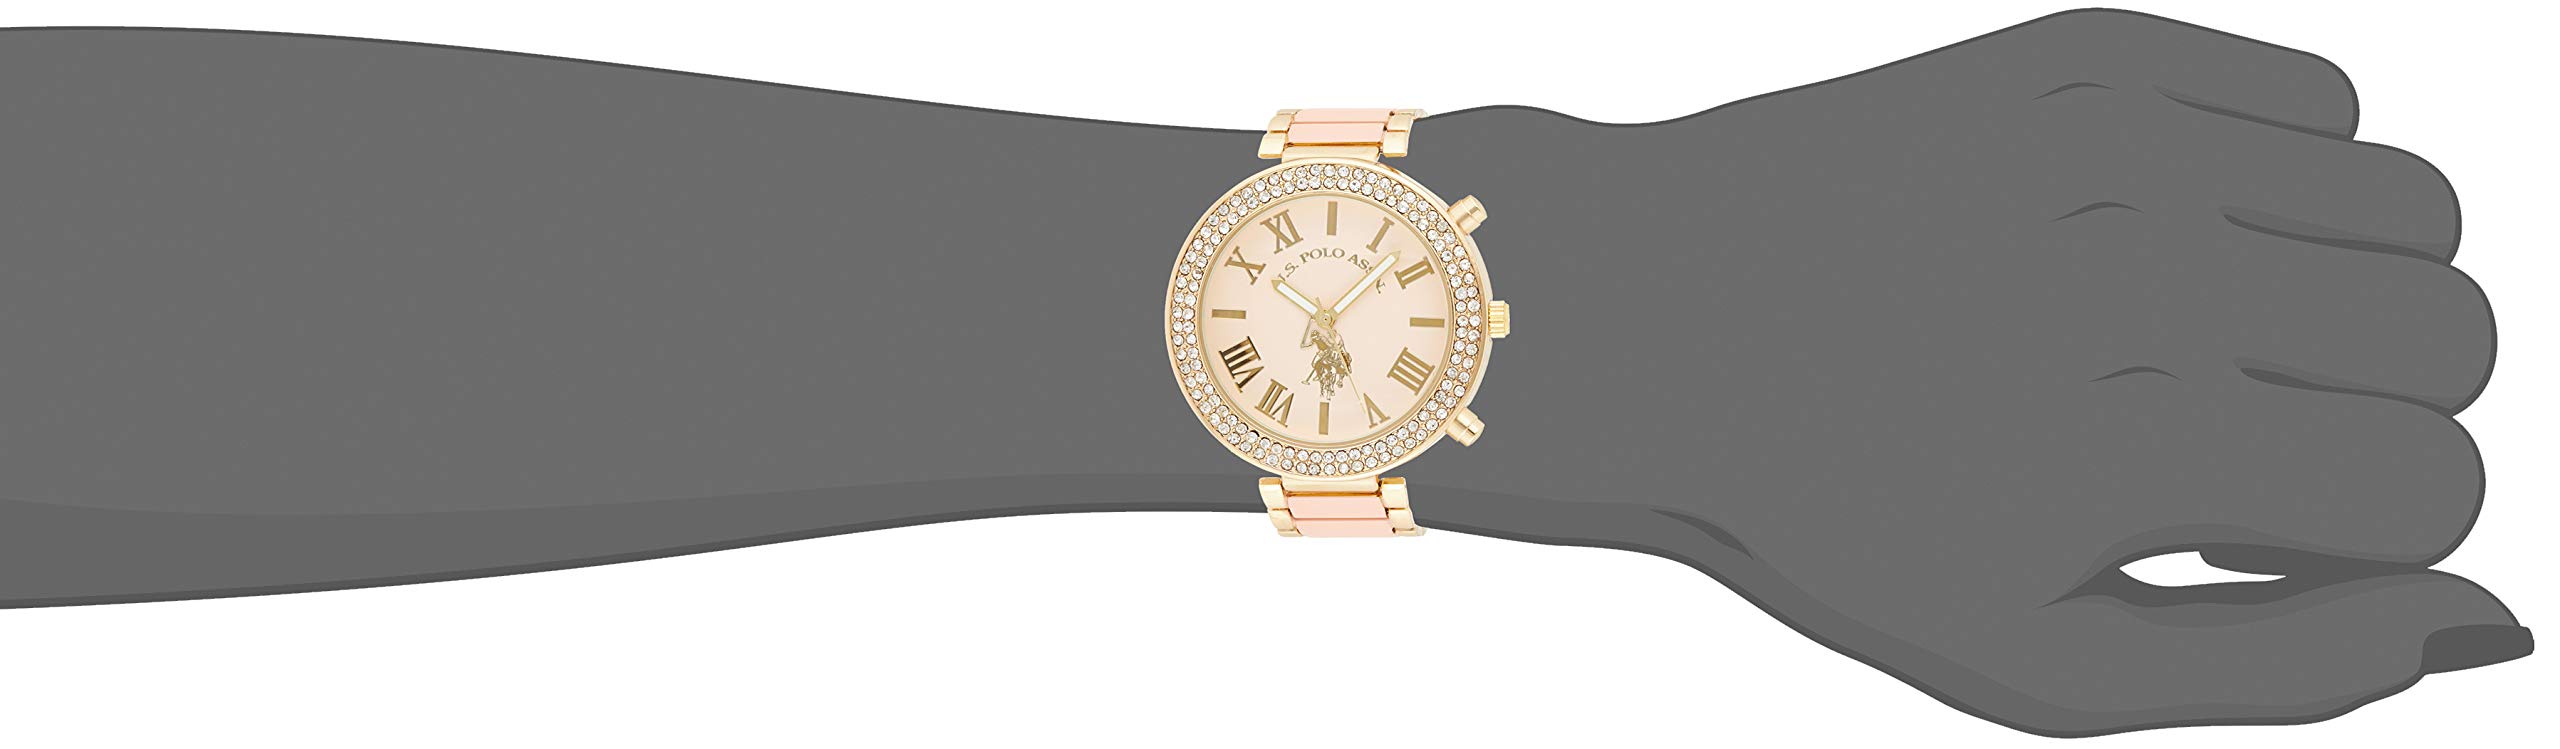 U.S. Polo Assn. Women's USC40063 Gold-Tone and Pink Bracelet Watch